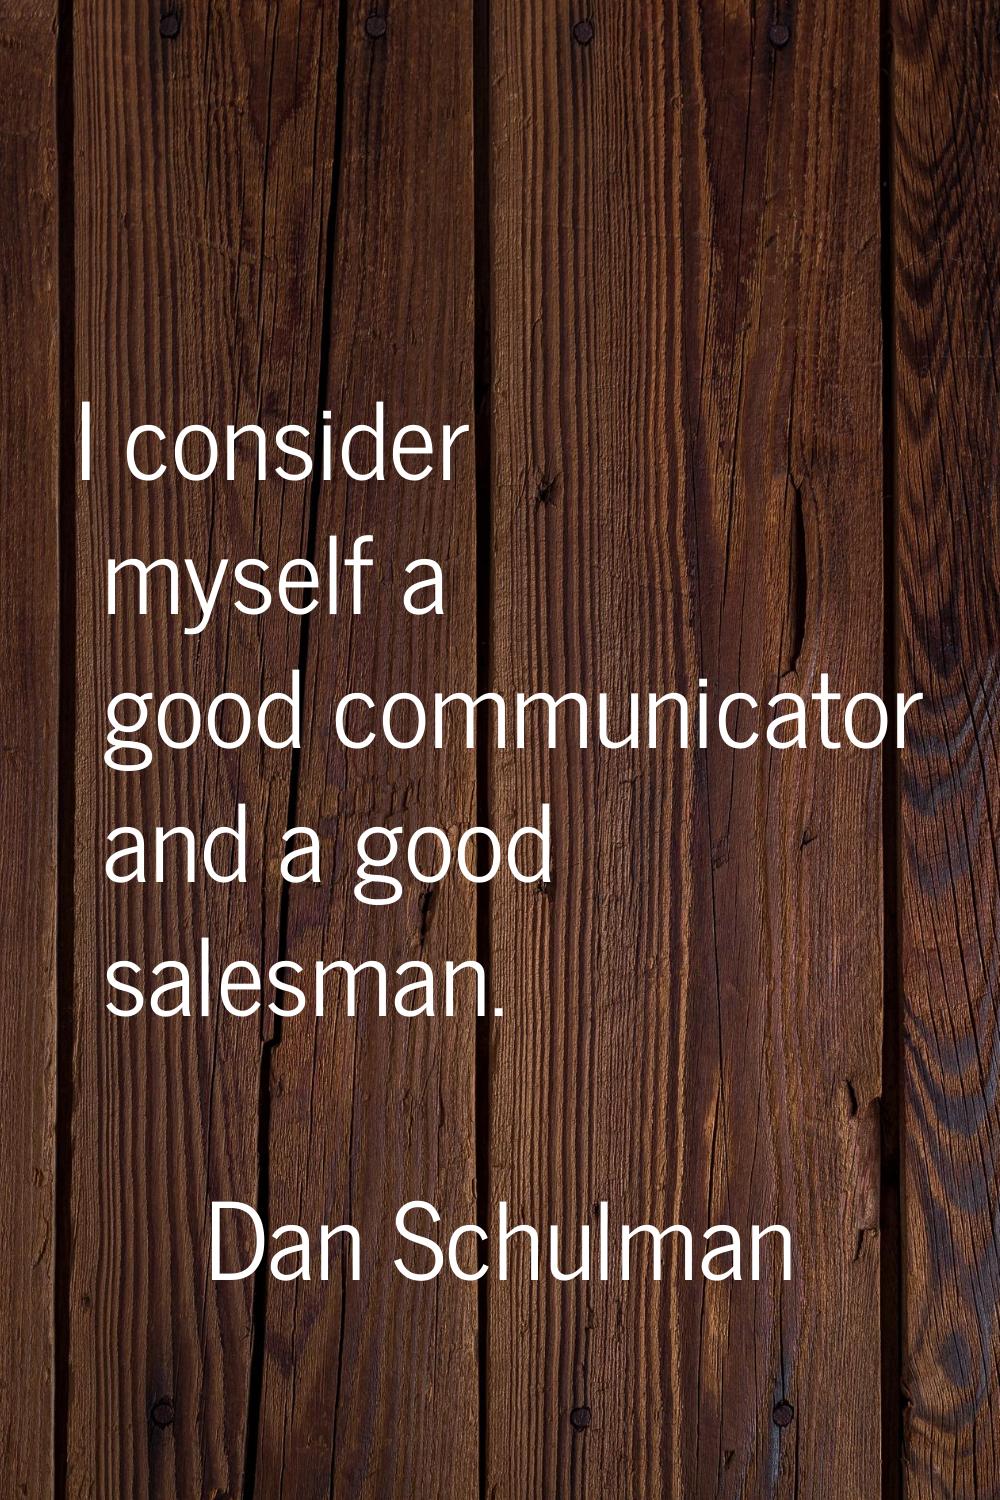 I consider myself a good communicator and a good salesman.